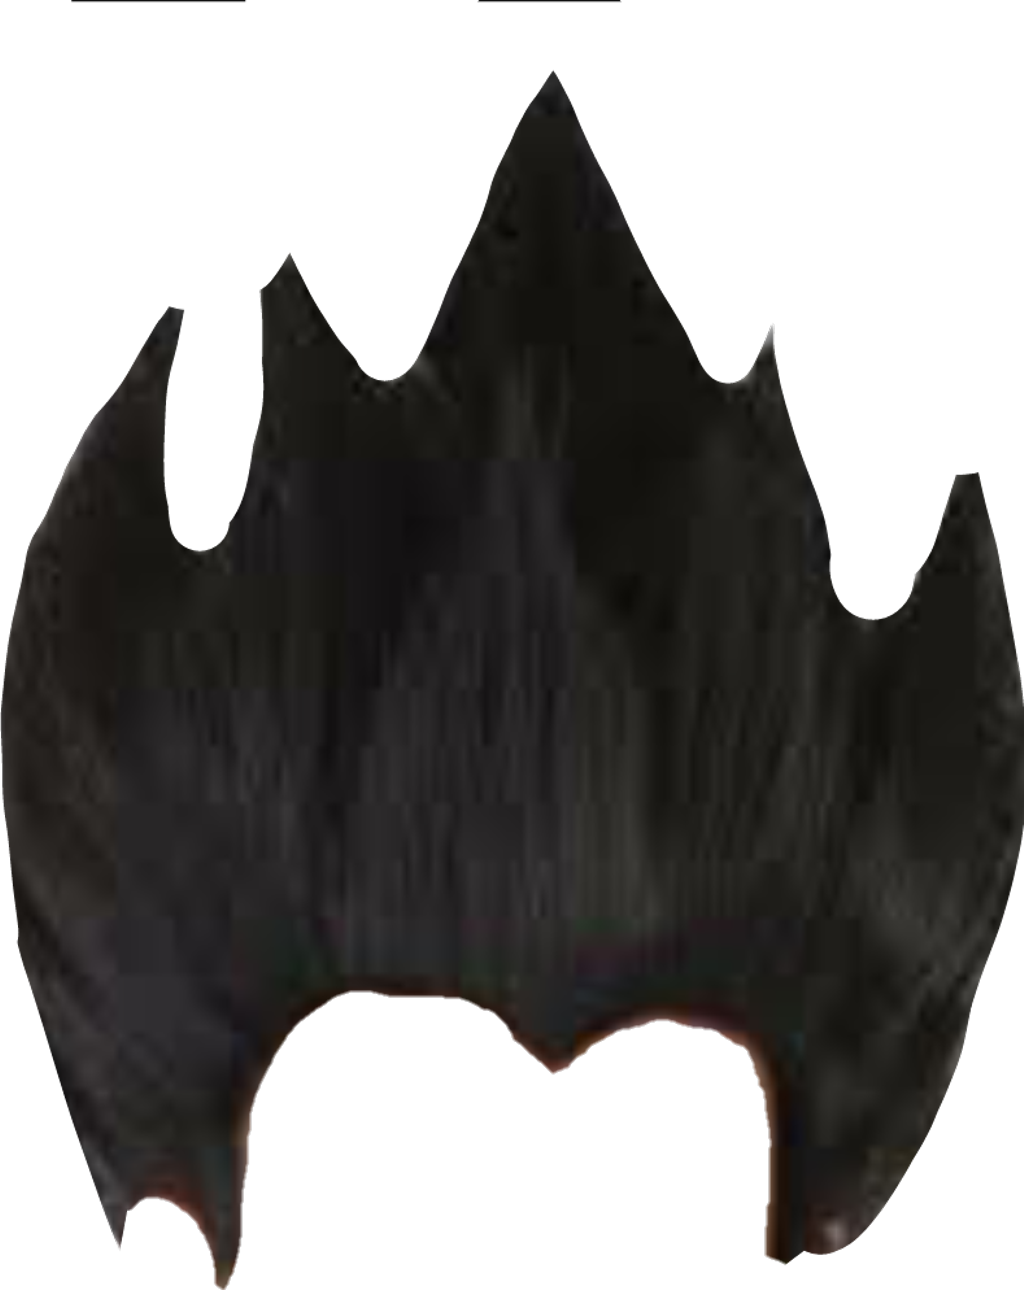 Black Bat Silhouette Graphic